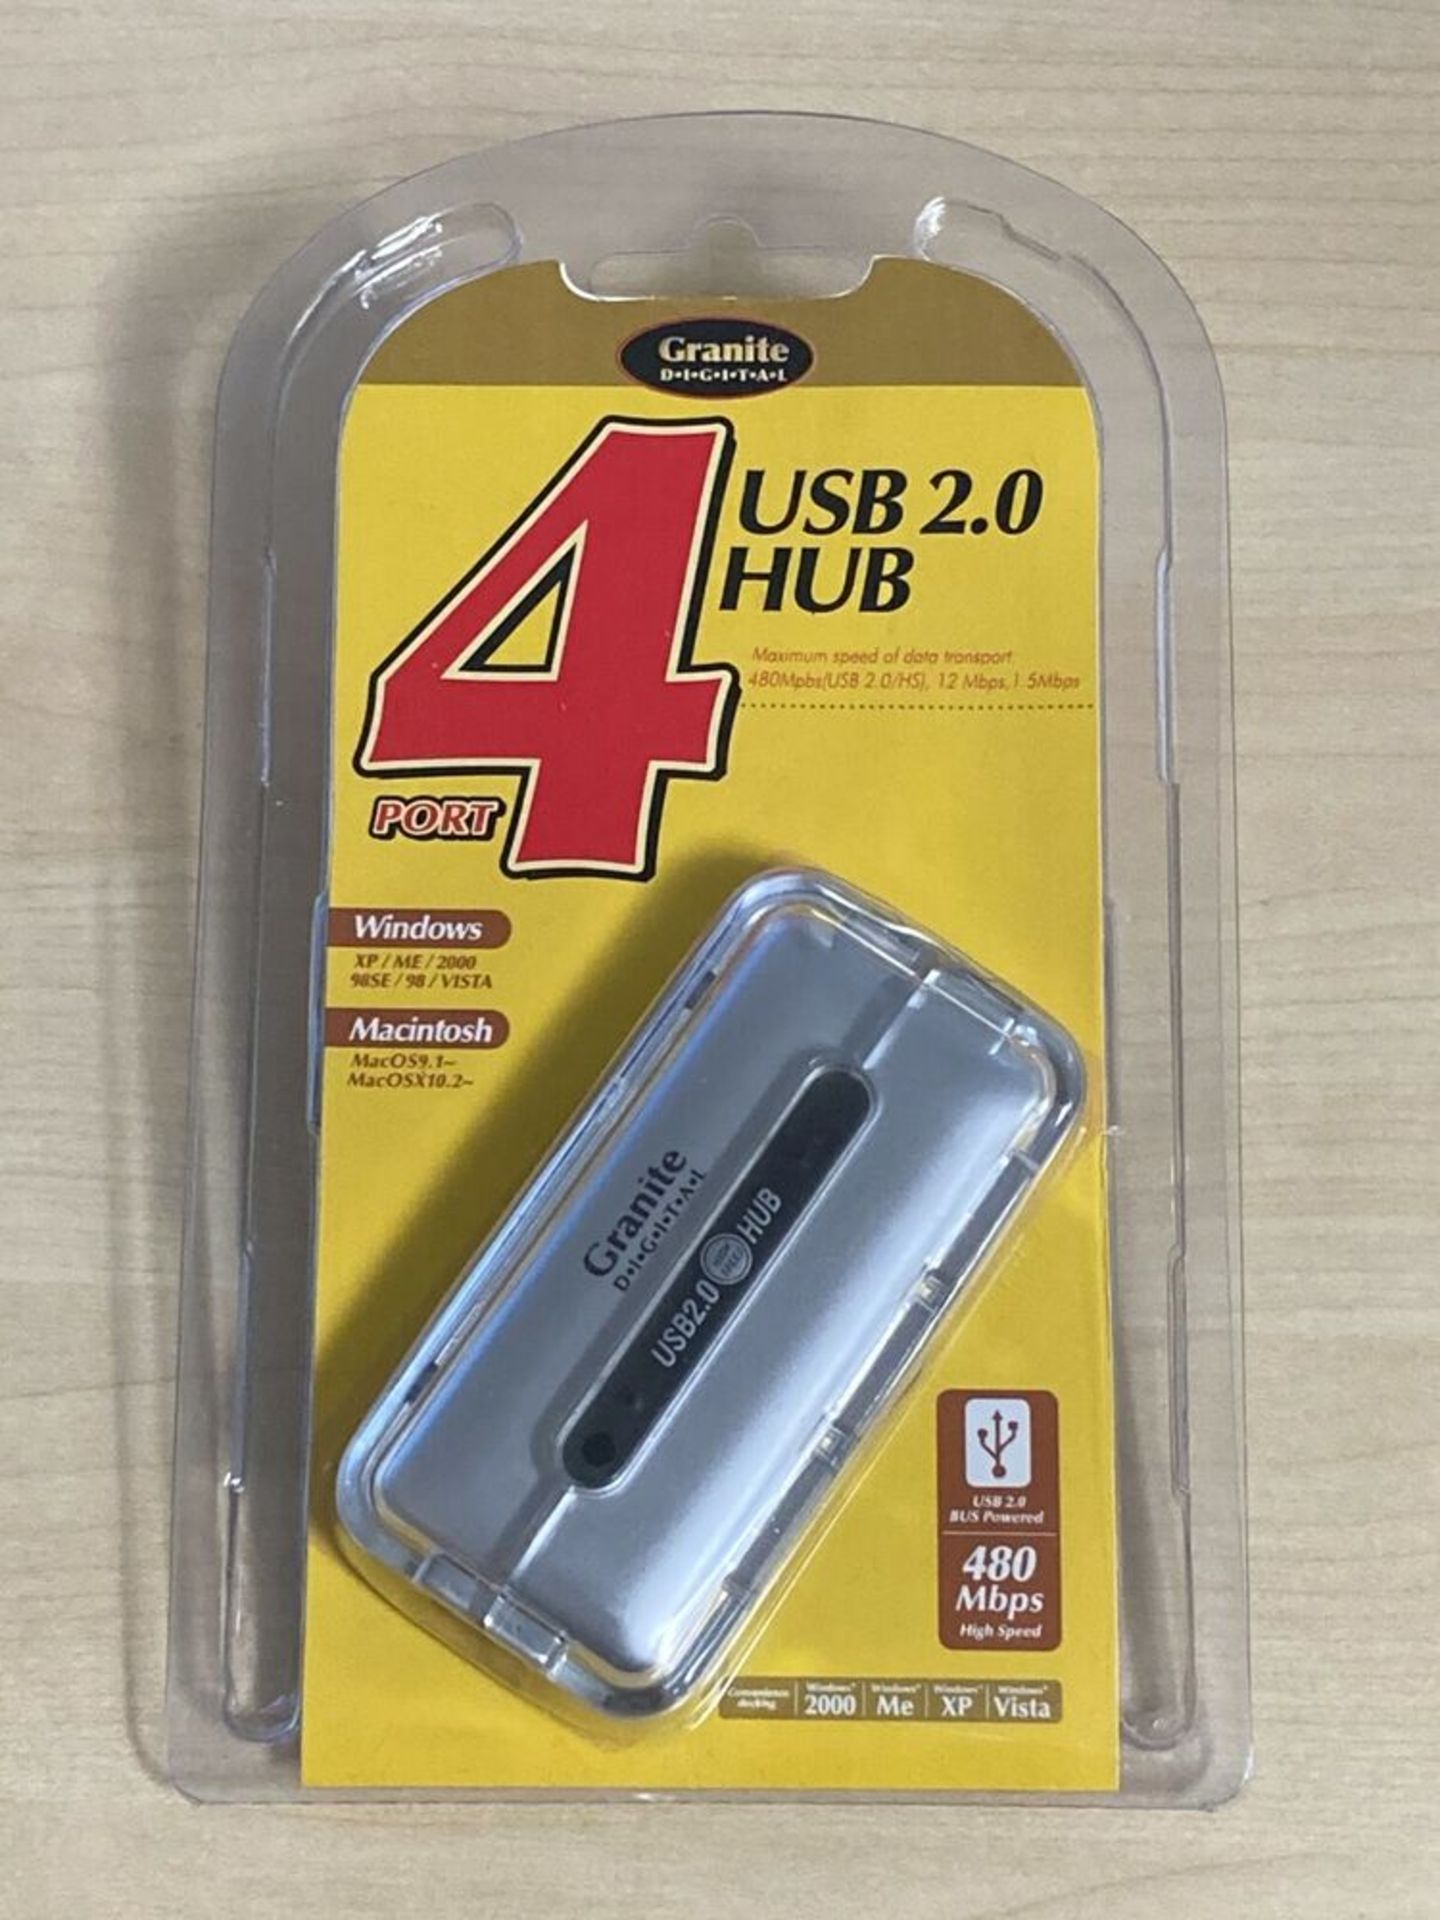 BOX OF 30 - Granite Digital 4-Port USB 2.0 Hub with USB A to Mini B Cable 1156